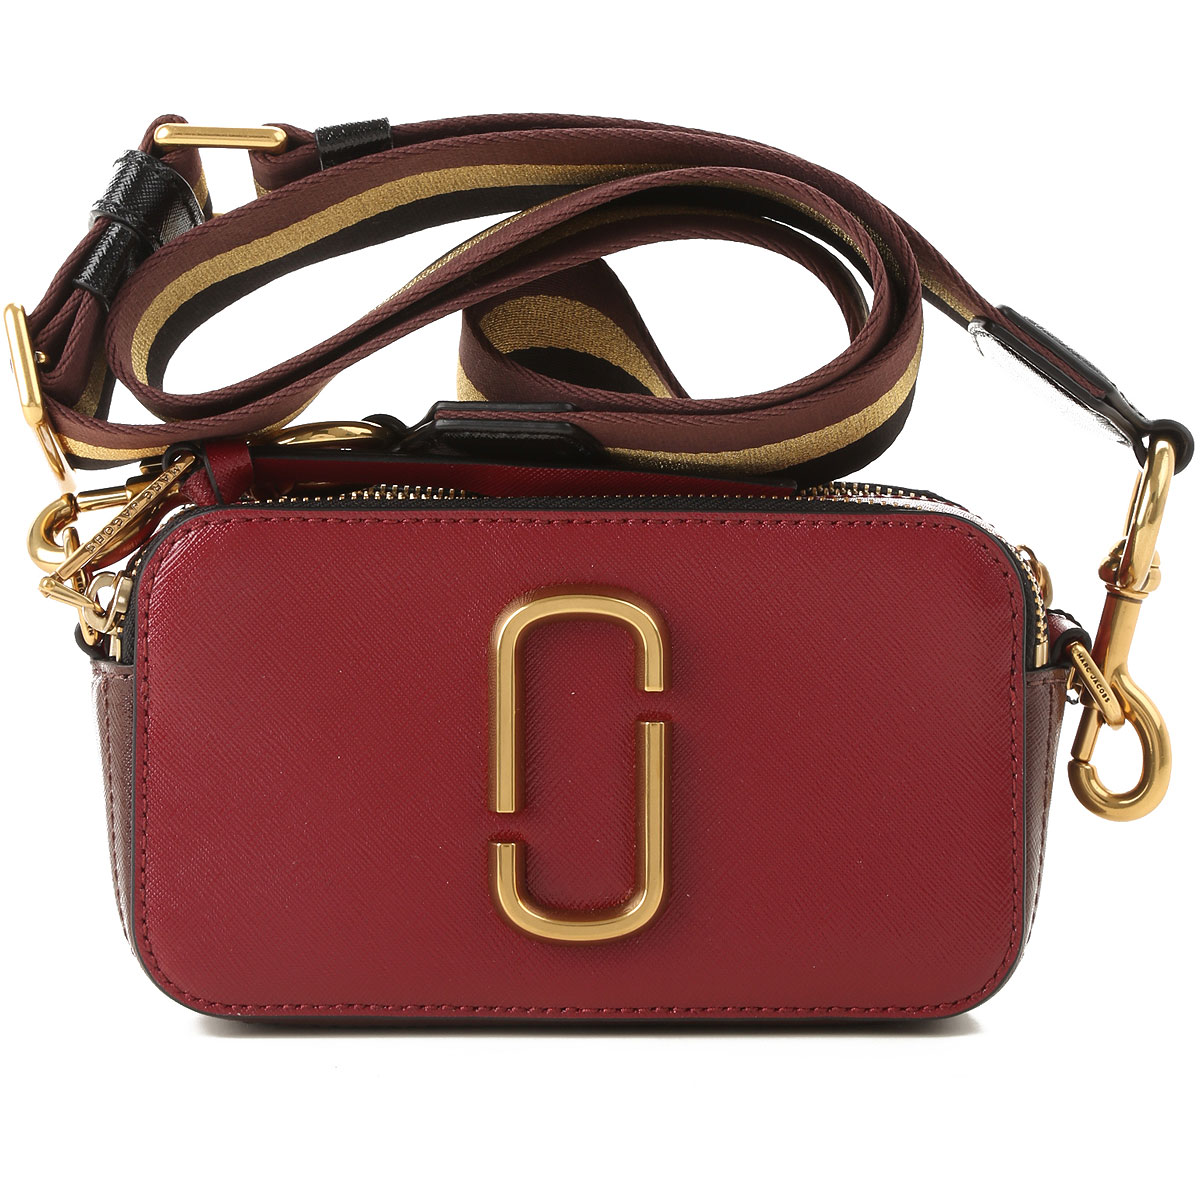 Handbags Marc Jacobs, Style code: m0012007-614-A282